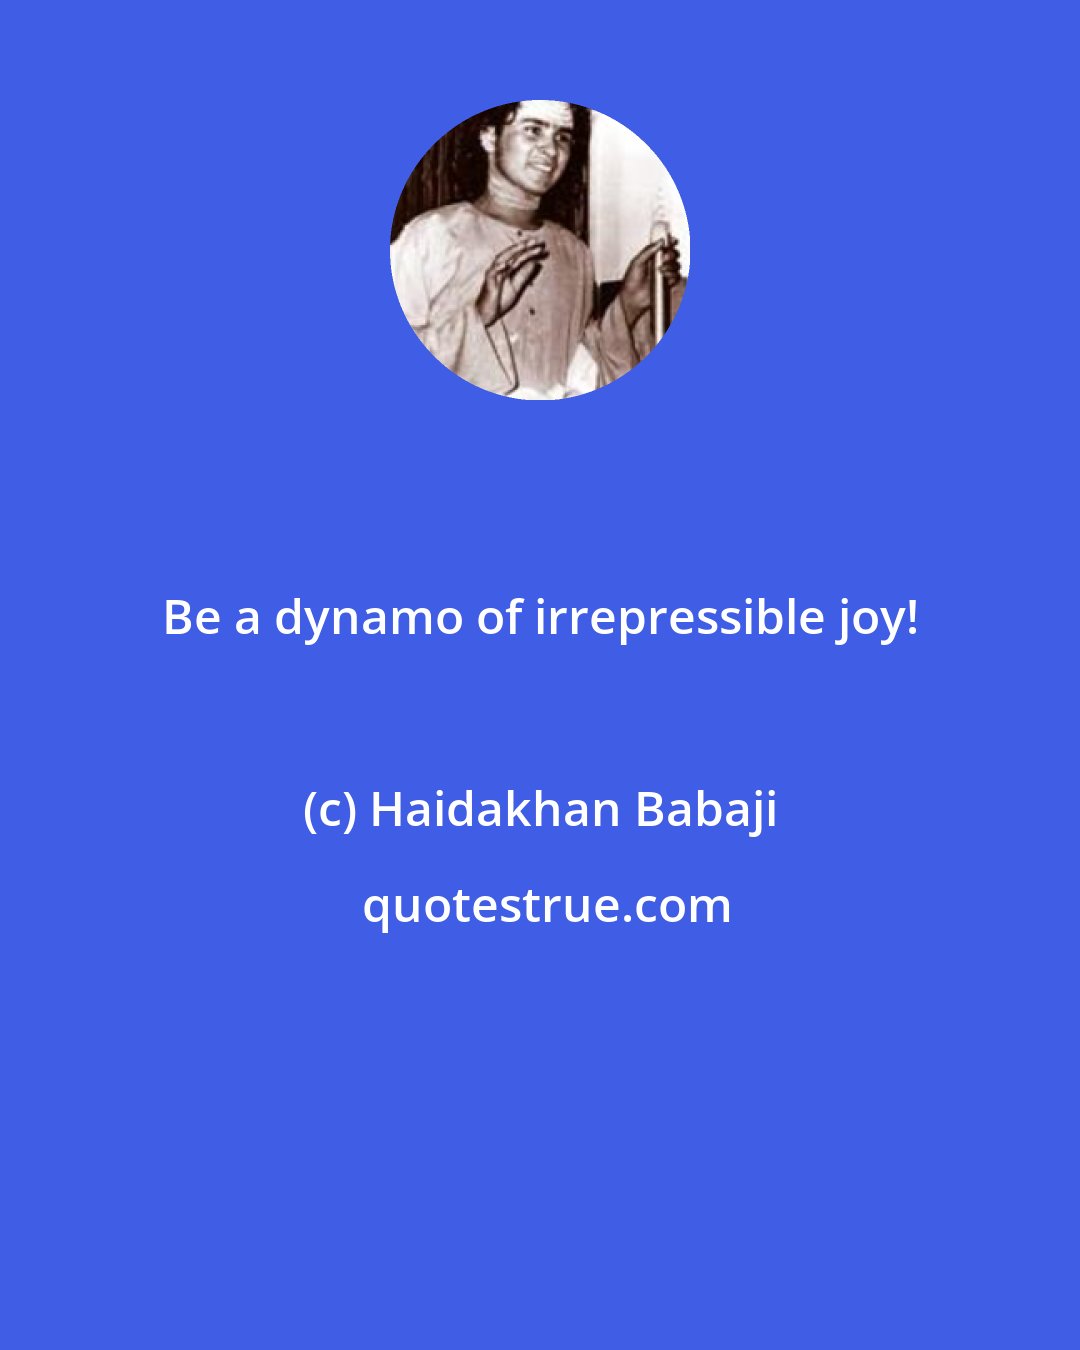 Haidakhan Babaji: Be a dynamo of irrepressible joy!